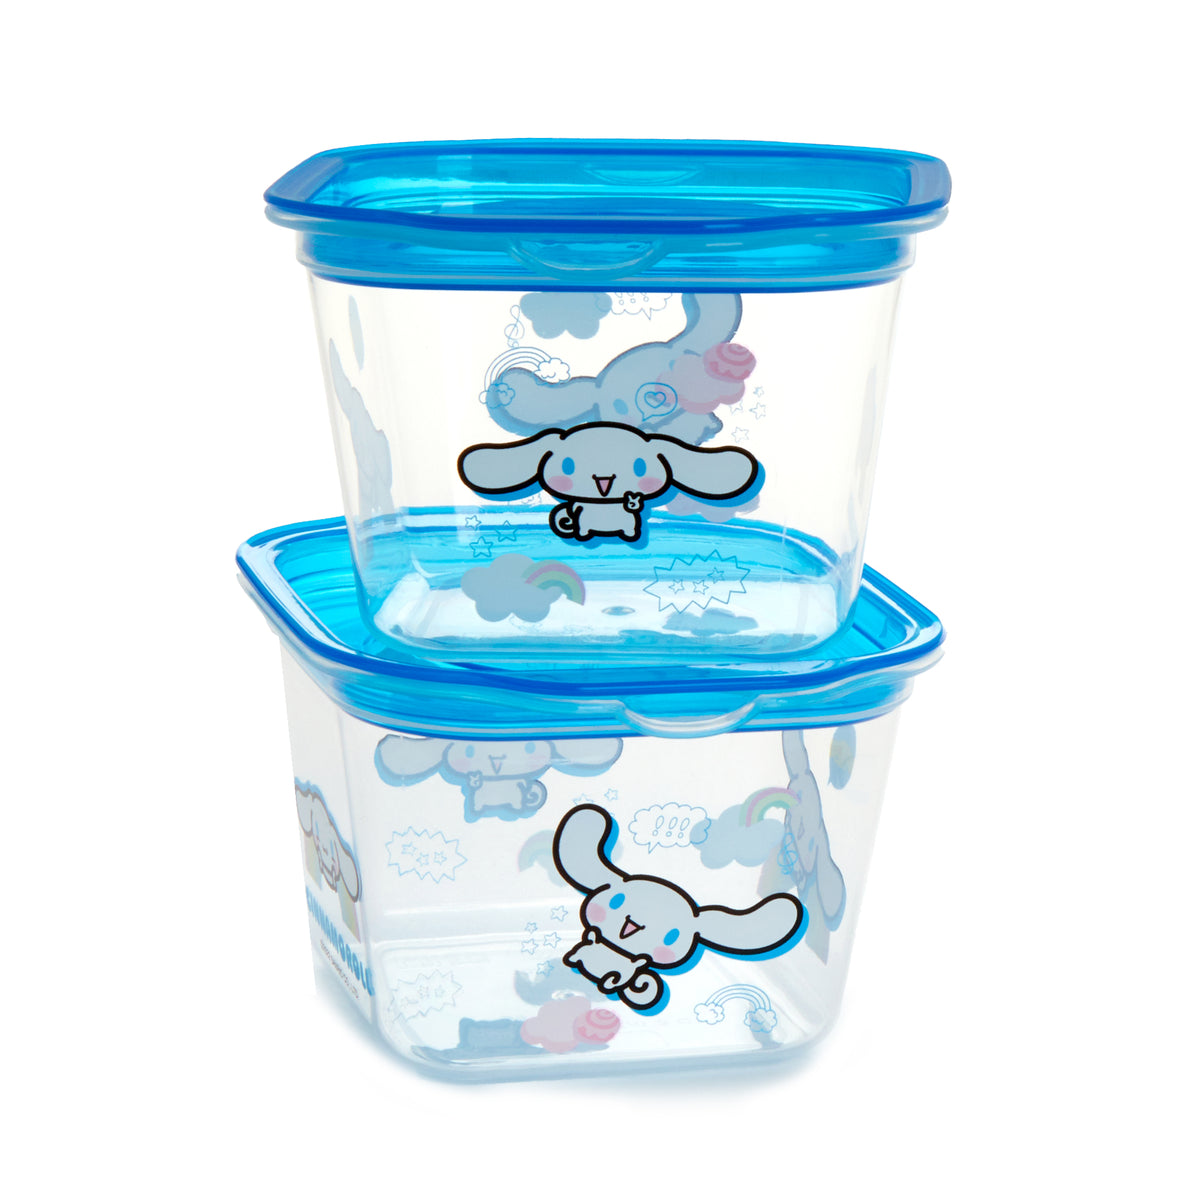 3pcs/set Reusable Glass Food Storage Box, Japanese Style Clear